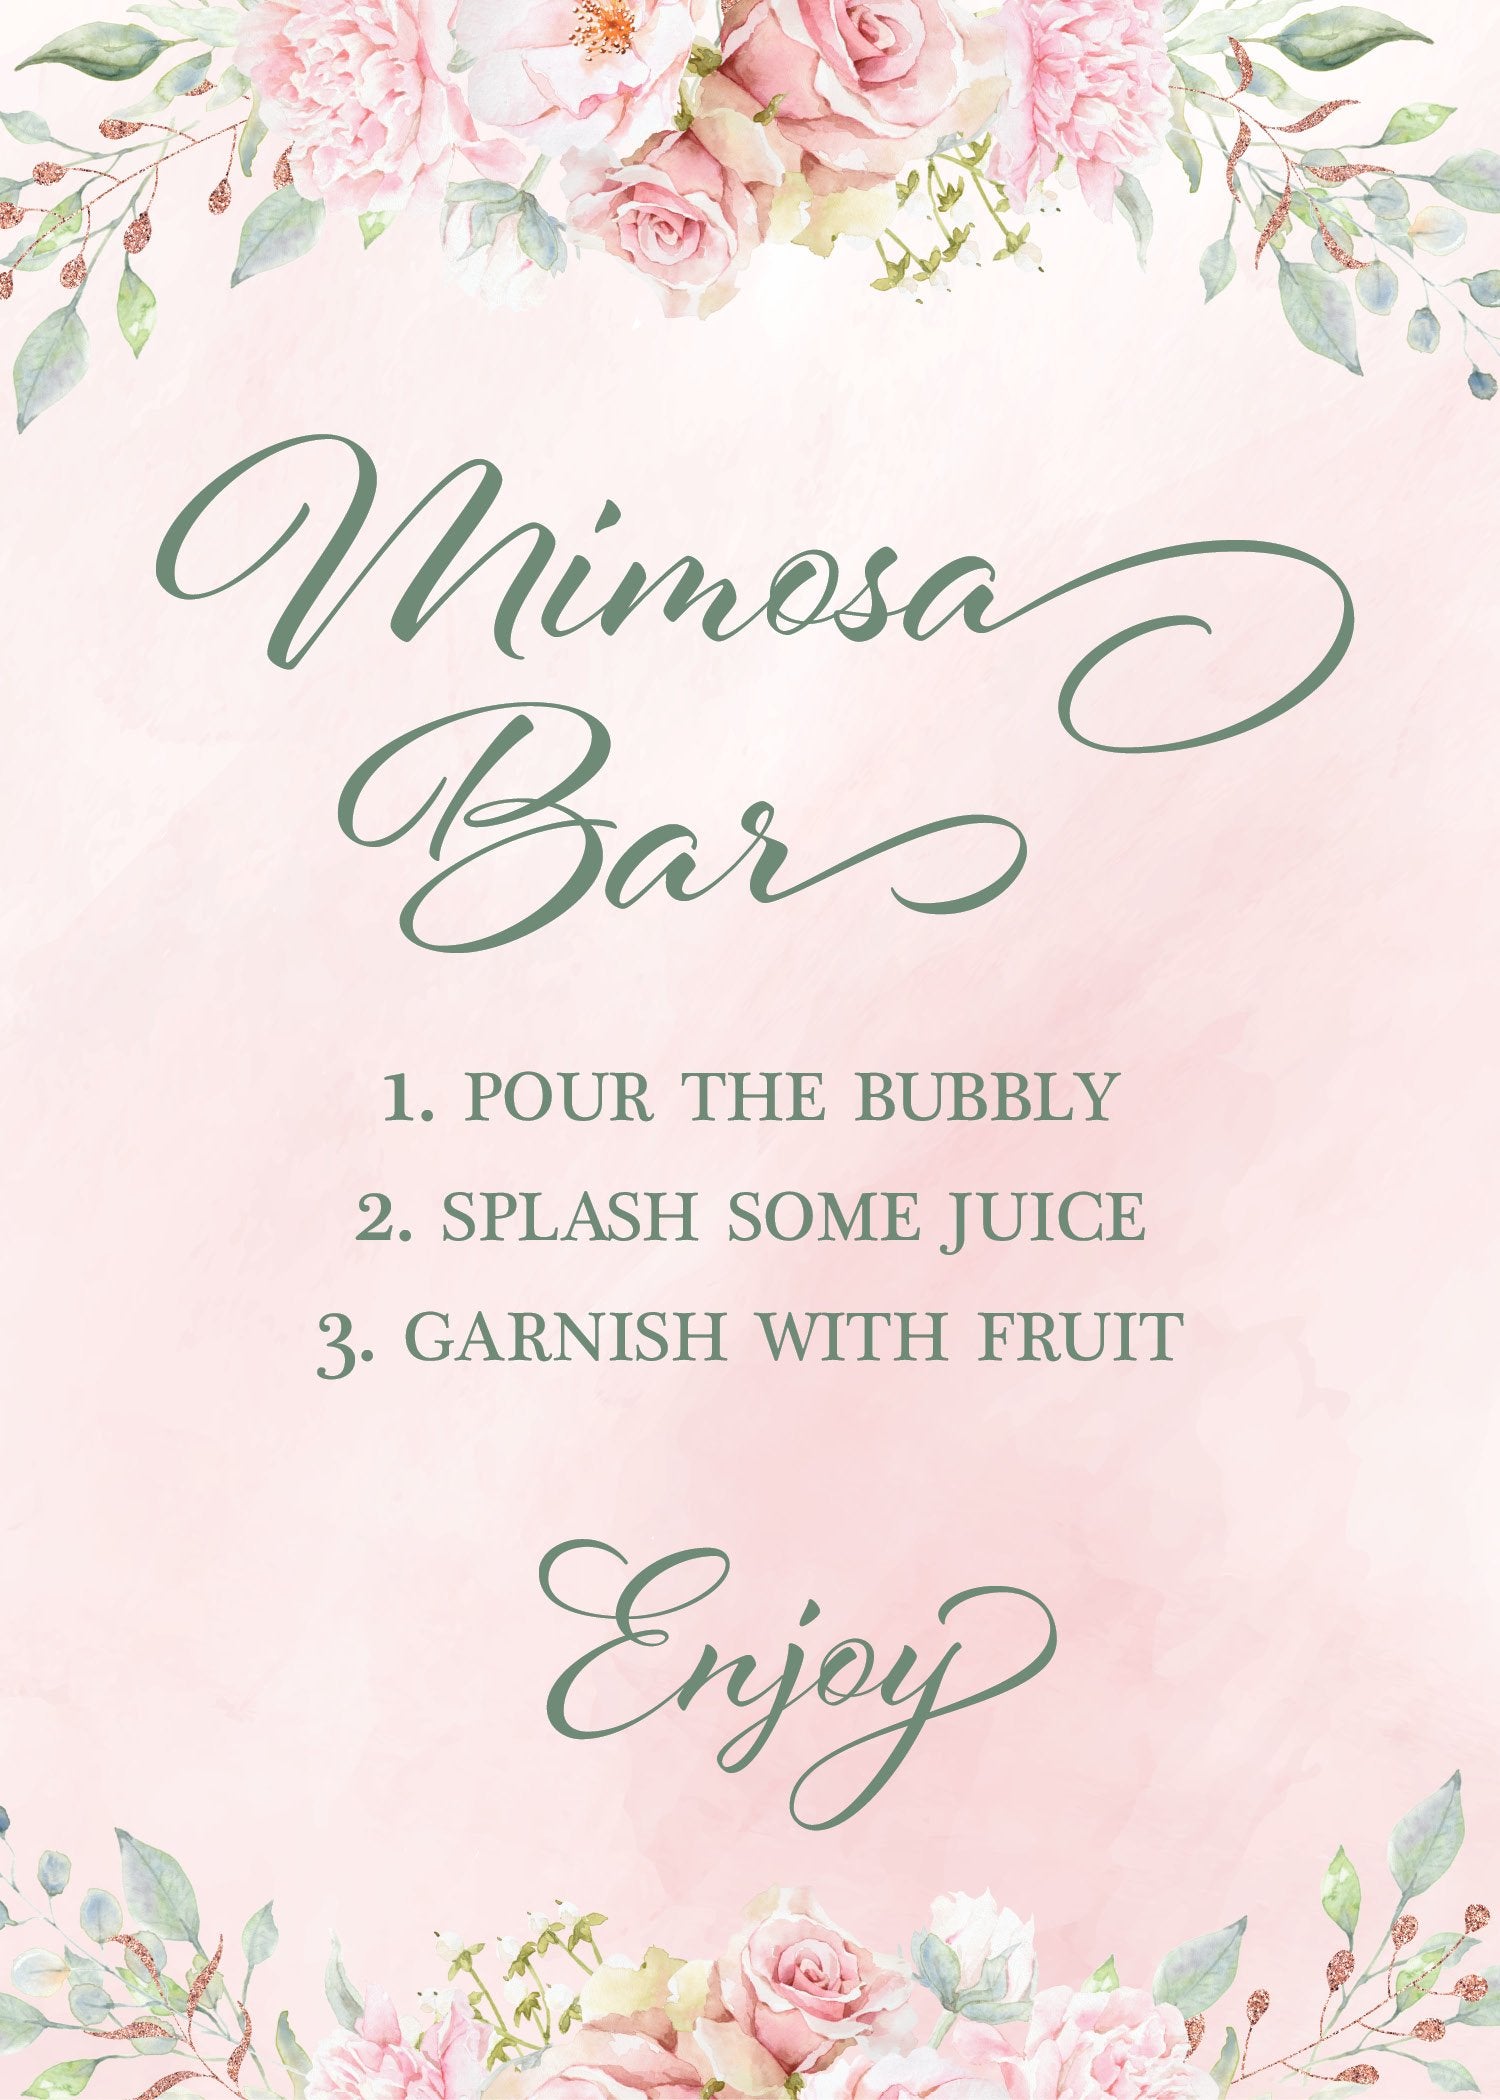 How to Plan a Mimosa Bar at a Bridal Shower